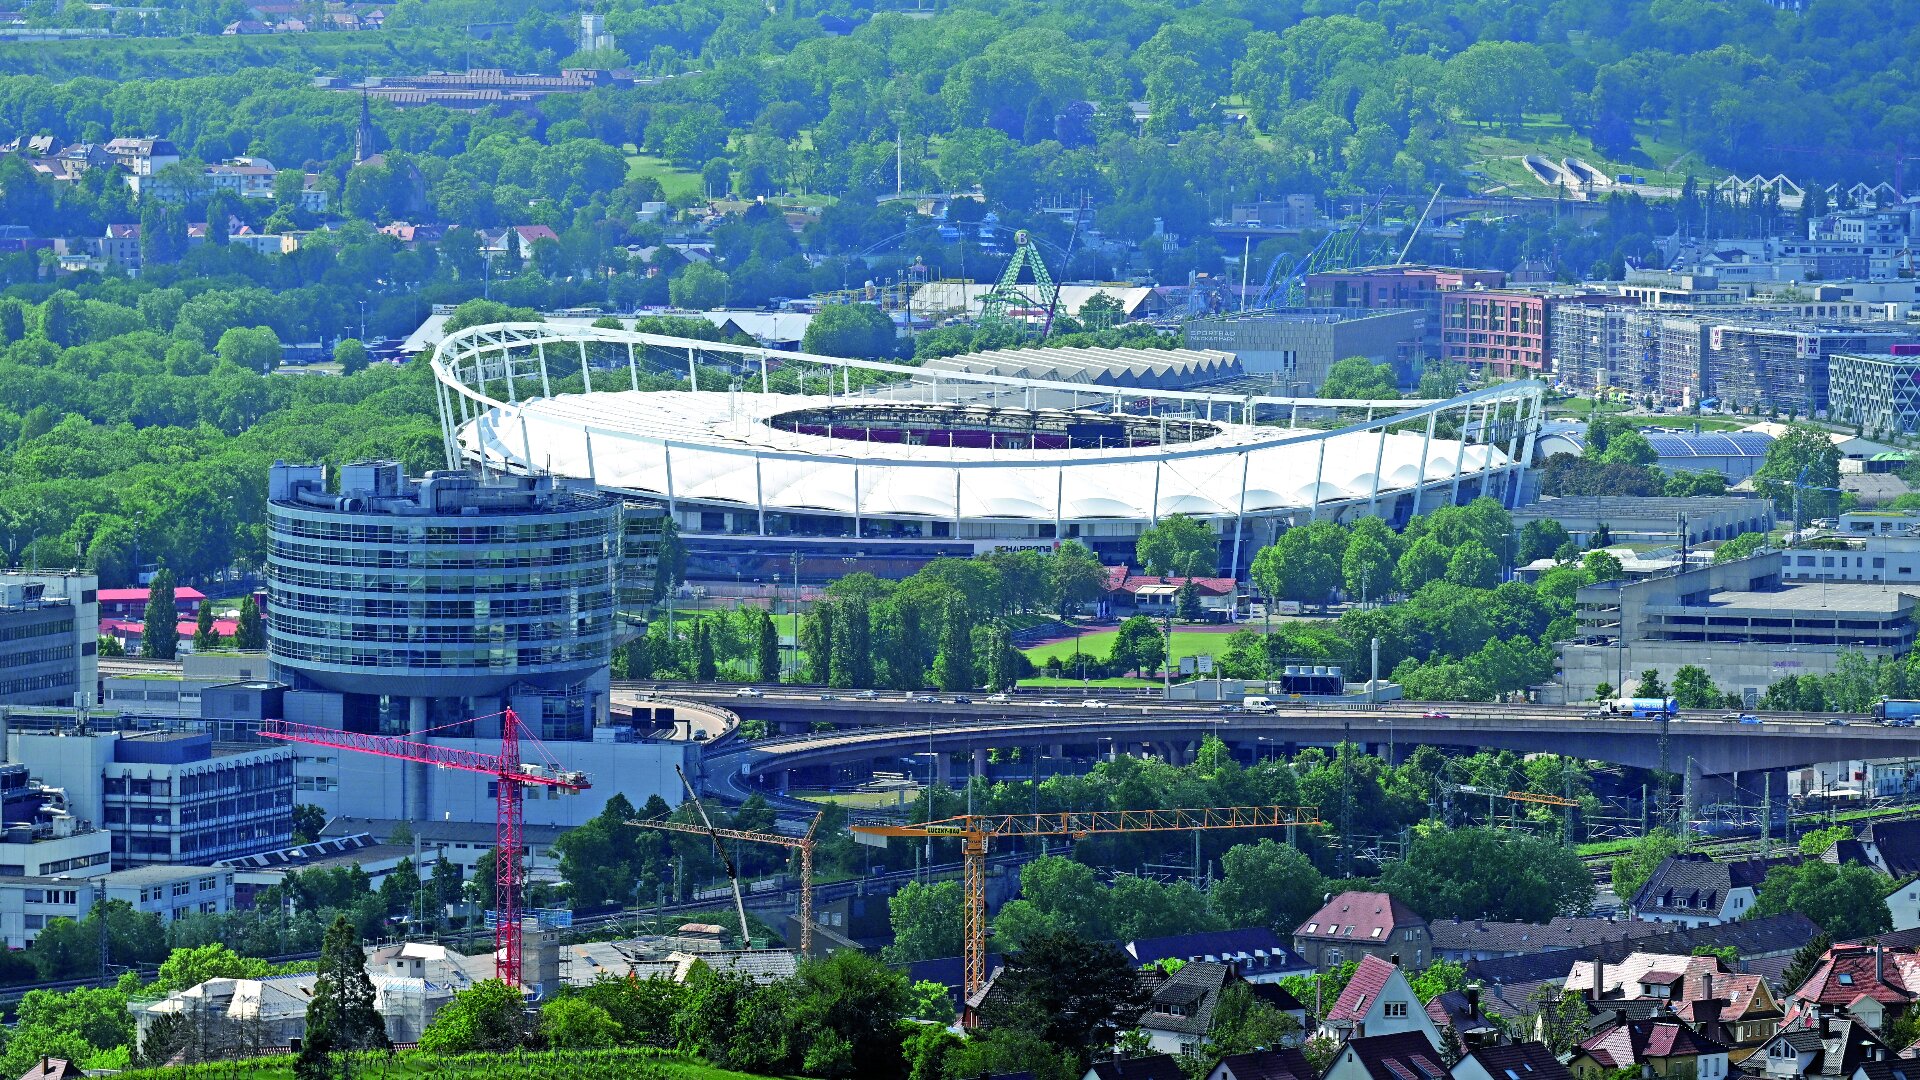 Stuttgart Arena